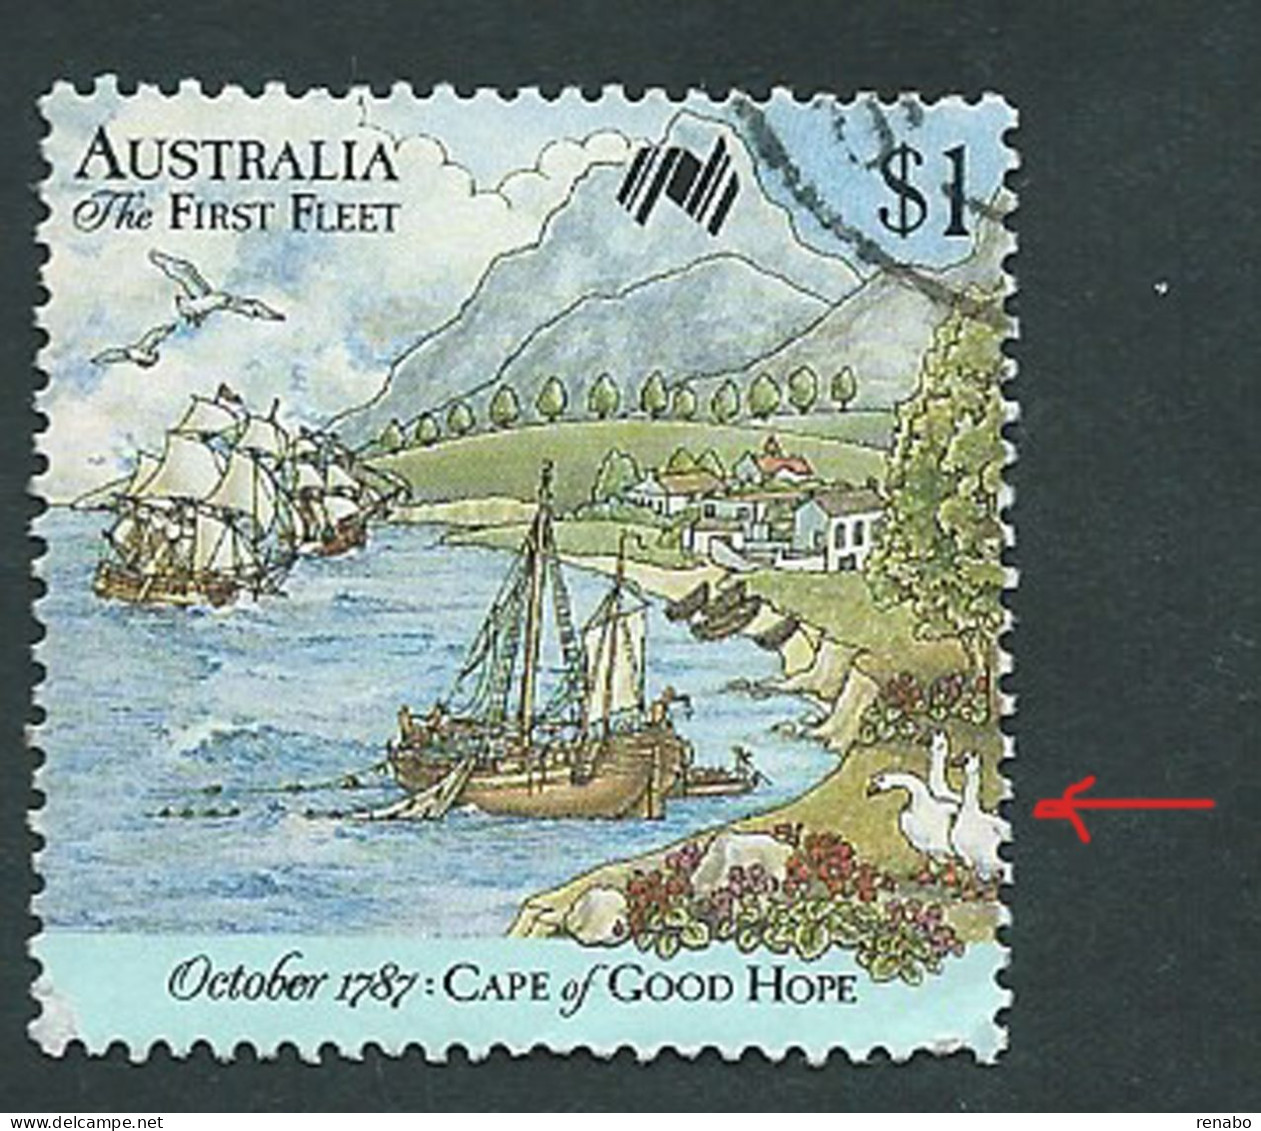 Australia, Australien, Australie 1987; Oche, Geese:The First Fleet. $ 1. Used. - Gansos